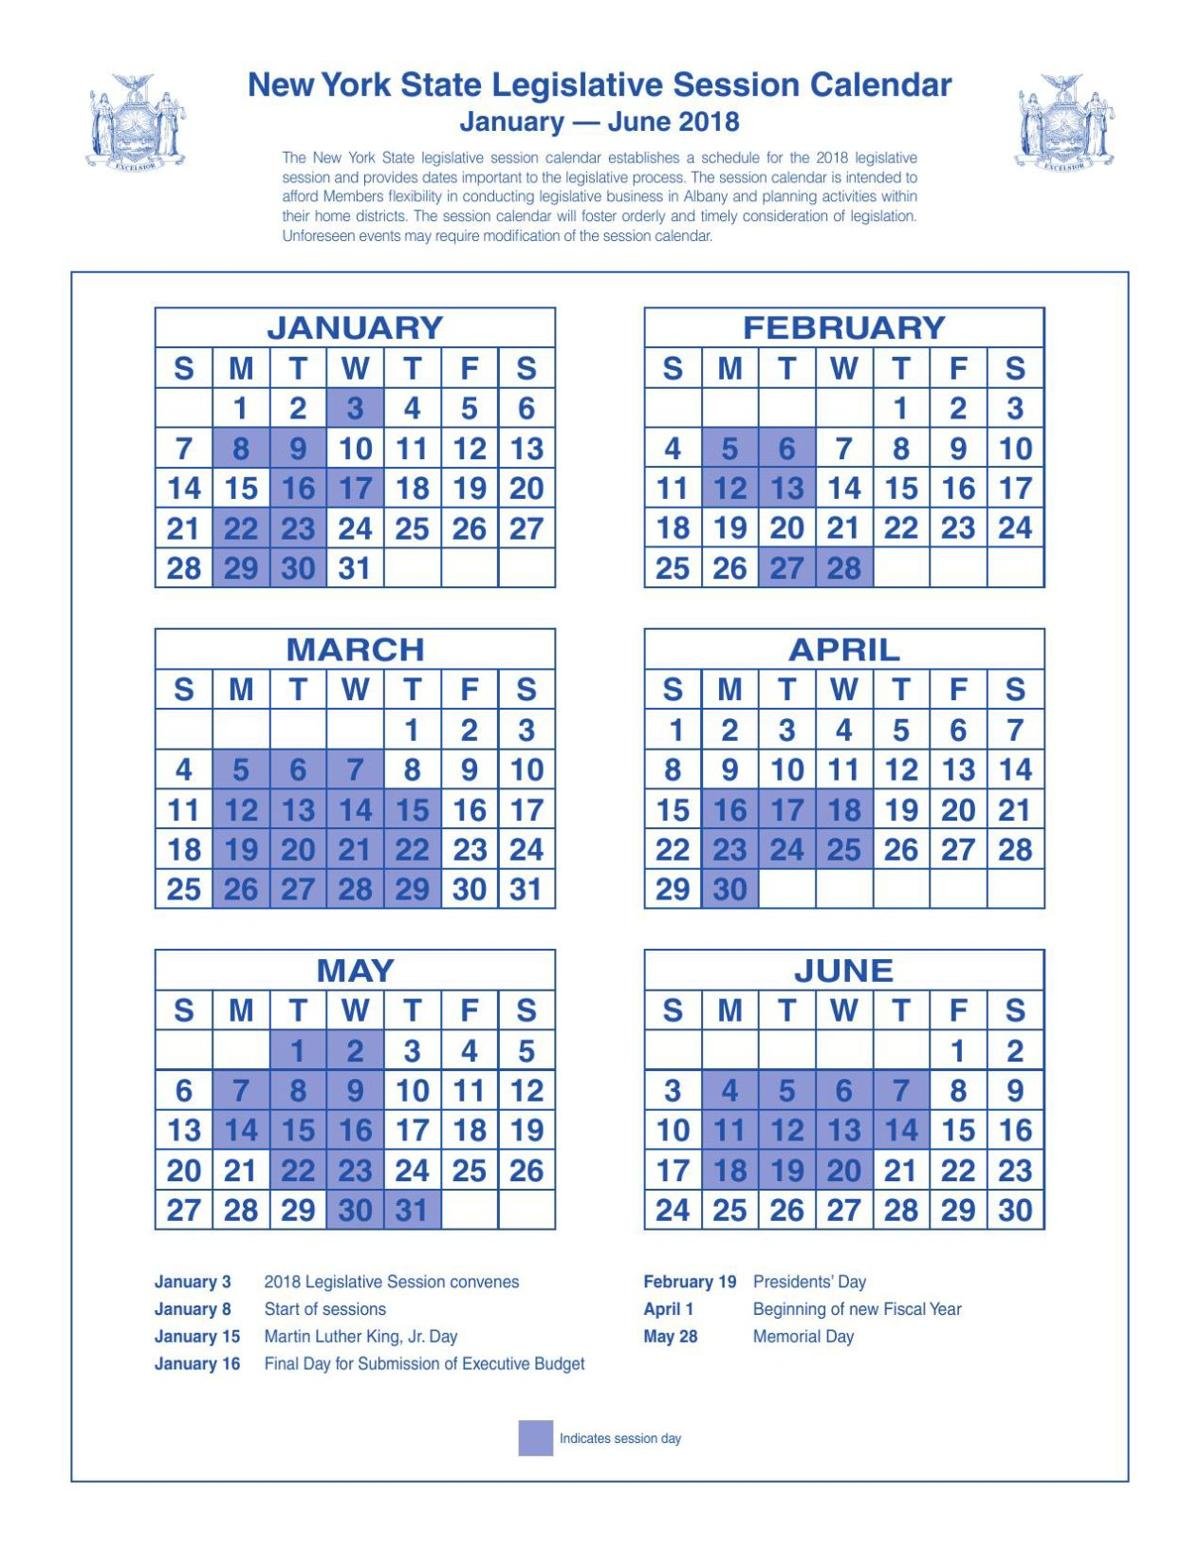 NY Legislature releases 2018 session calendar Eye on NY